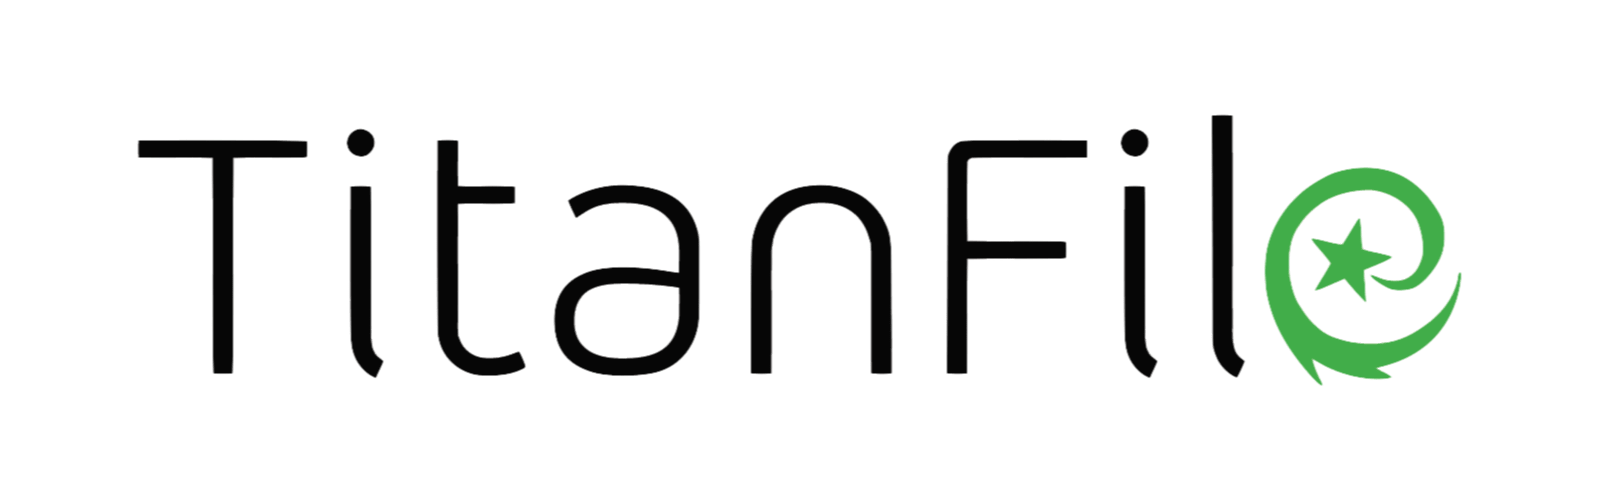 Titan File Logo 